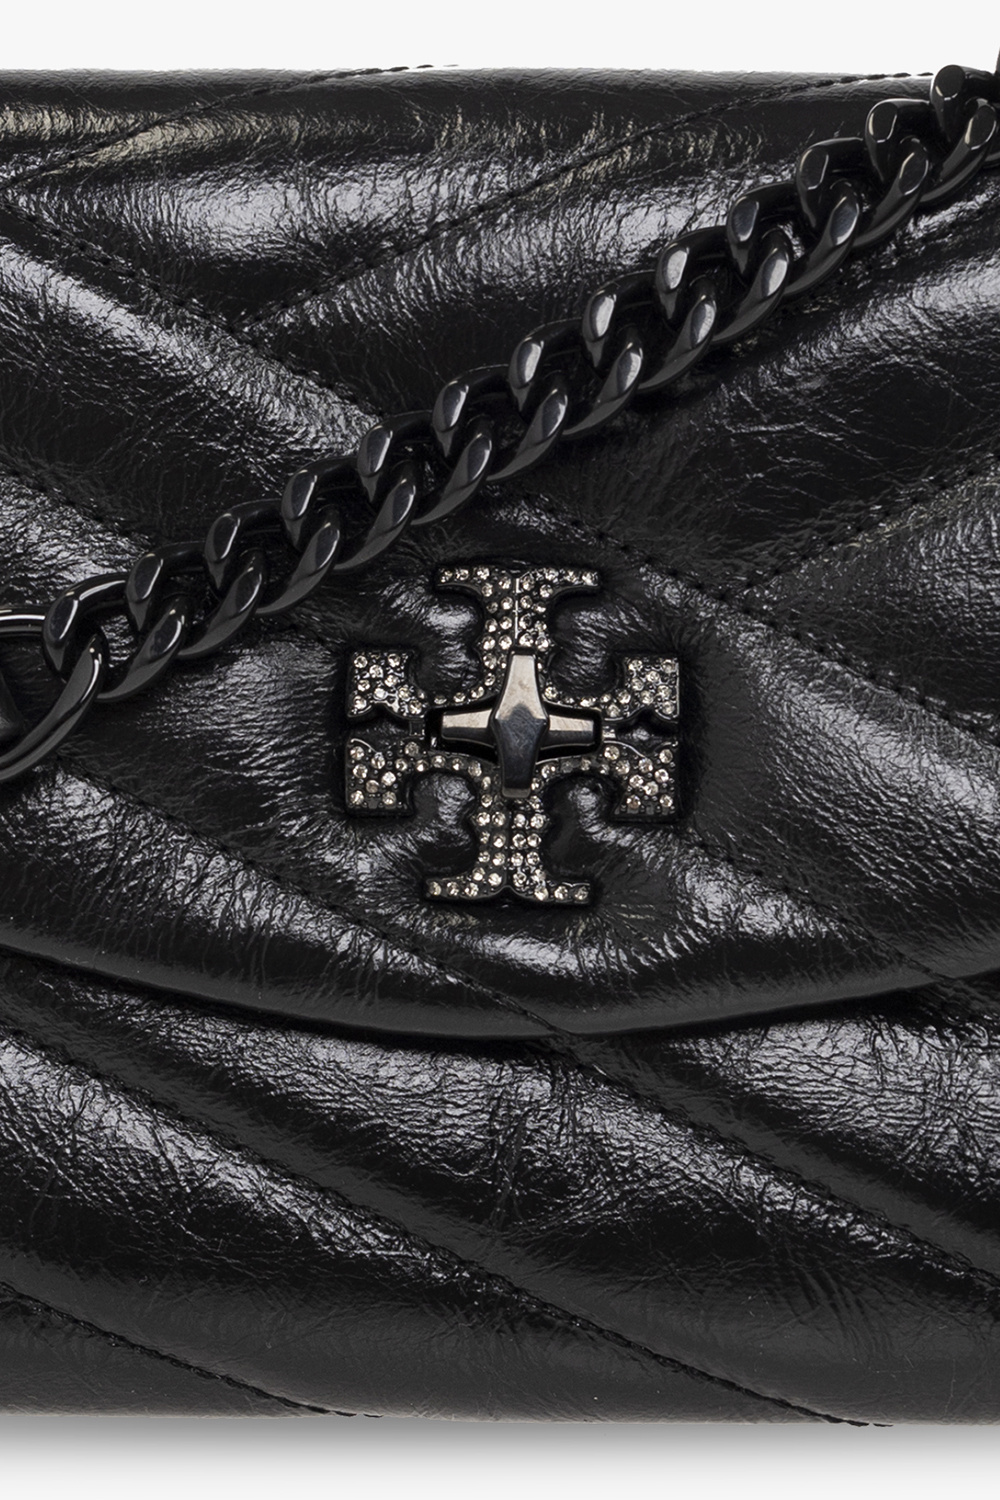 Tory Burch Women's Kira Chevron Chain Wallet, Black, One Size : Clothing,  Shoes & Jewelry 